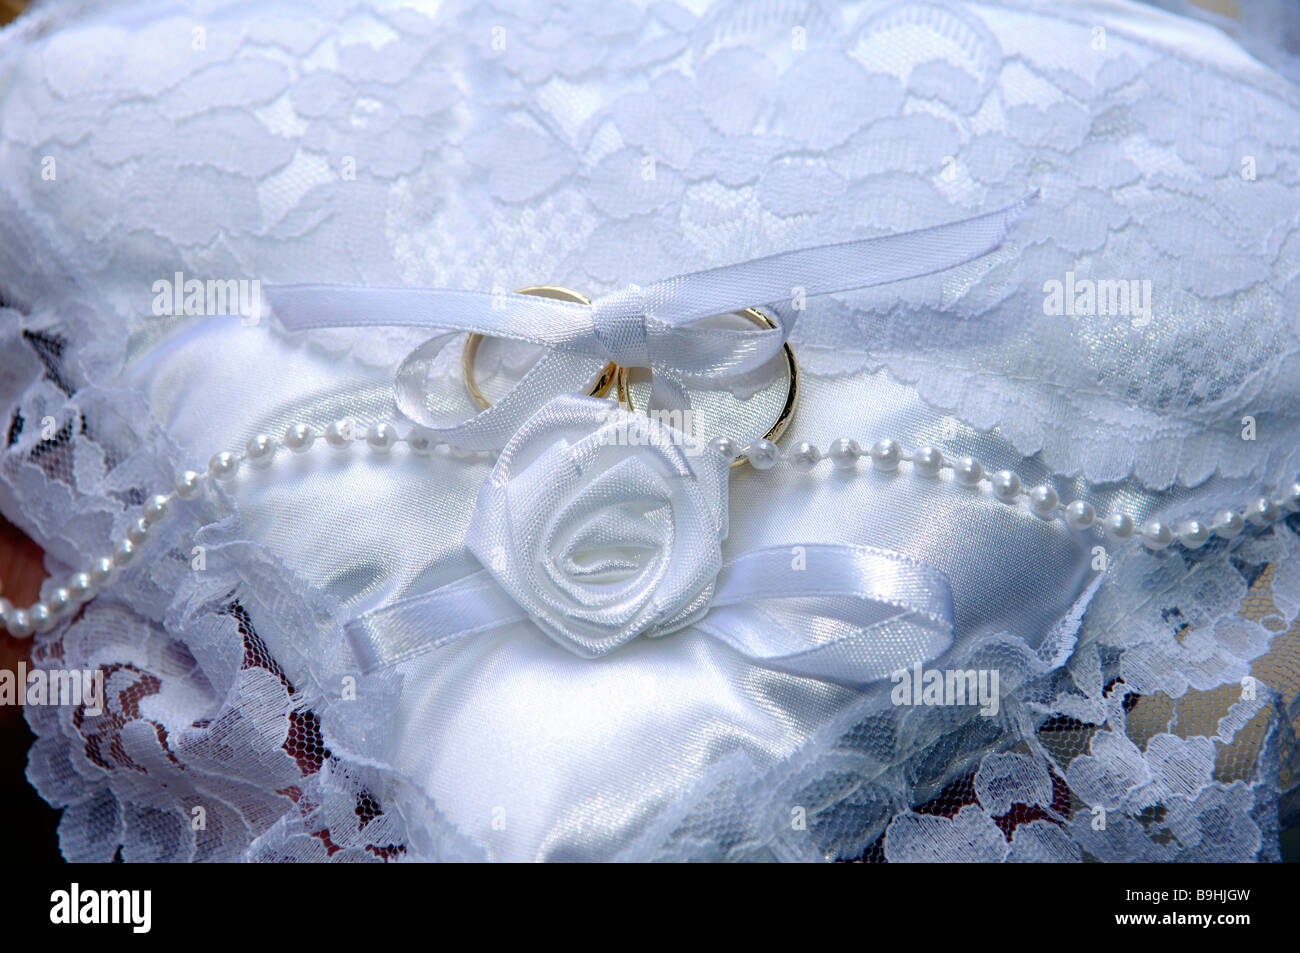 Wedding rings on a decorative white cushion Stock Photo